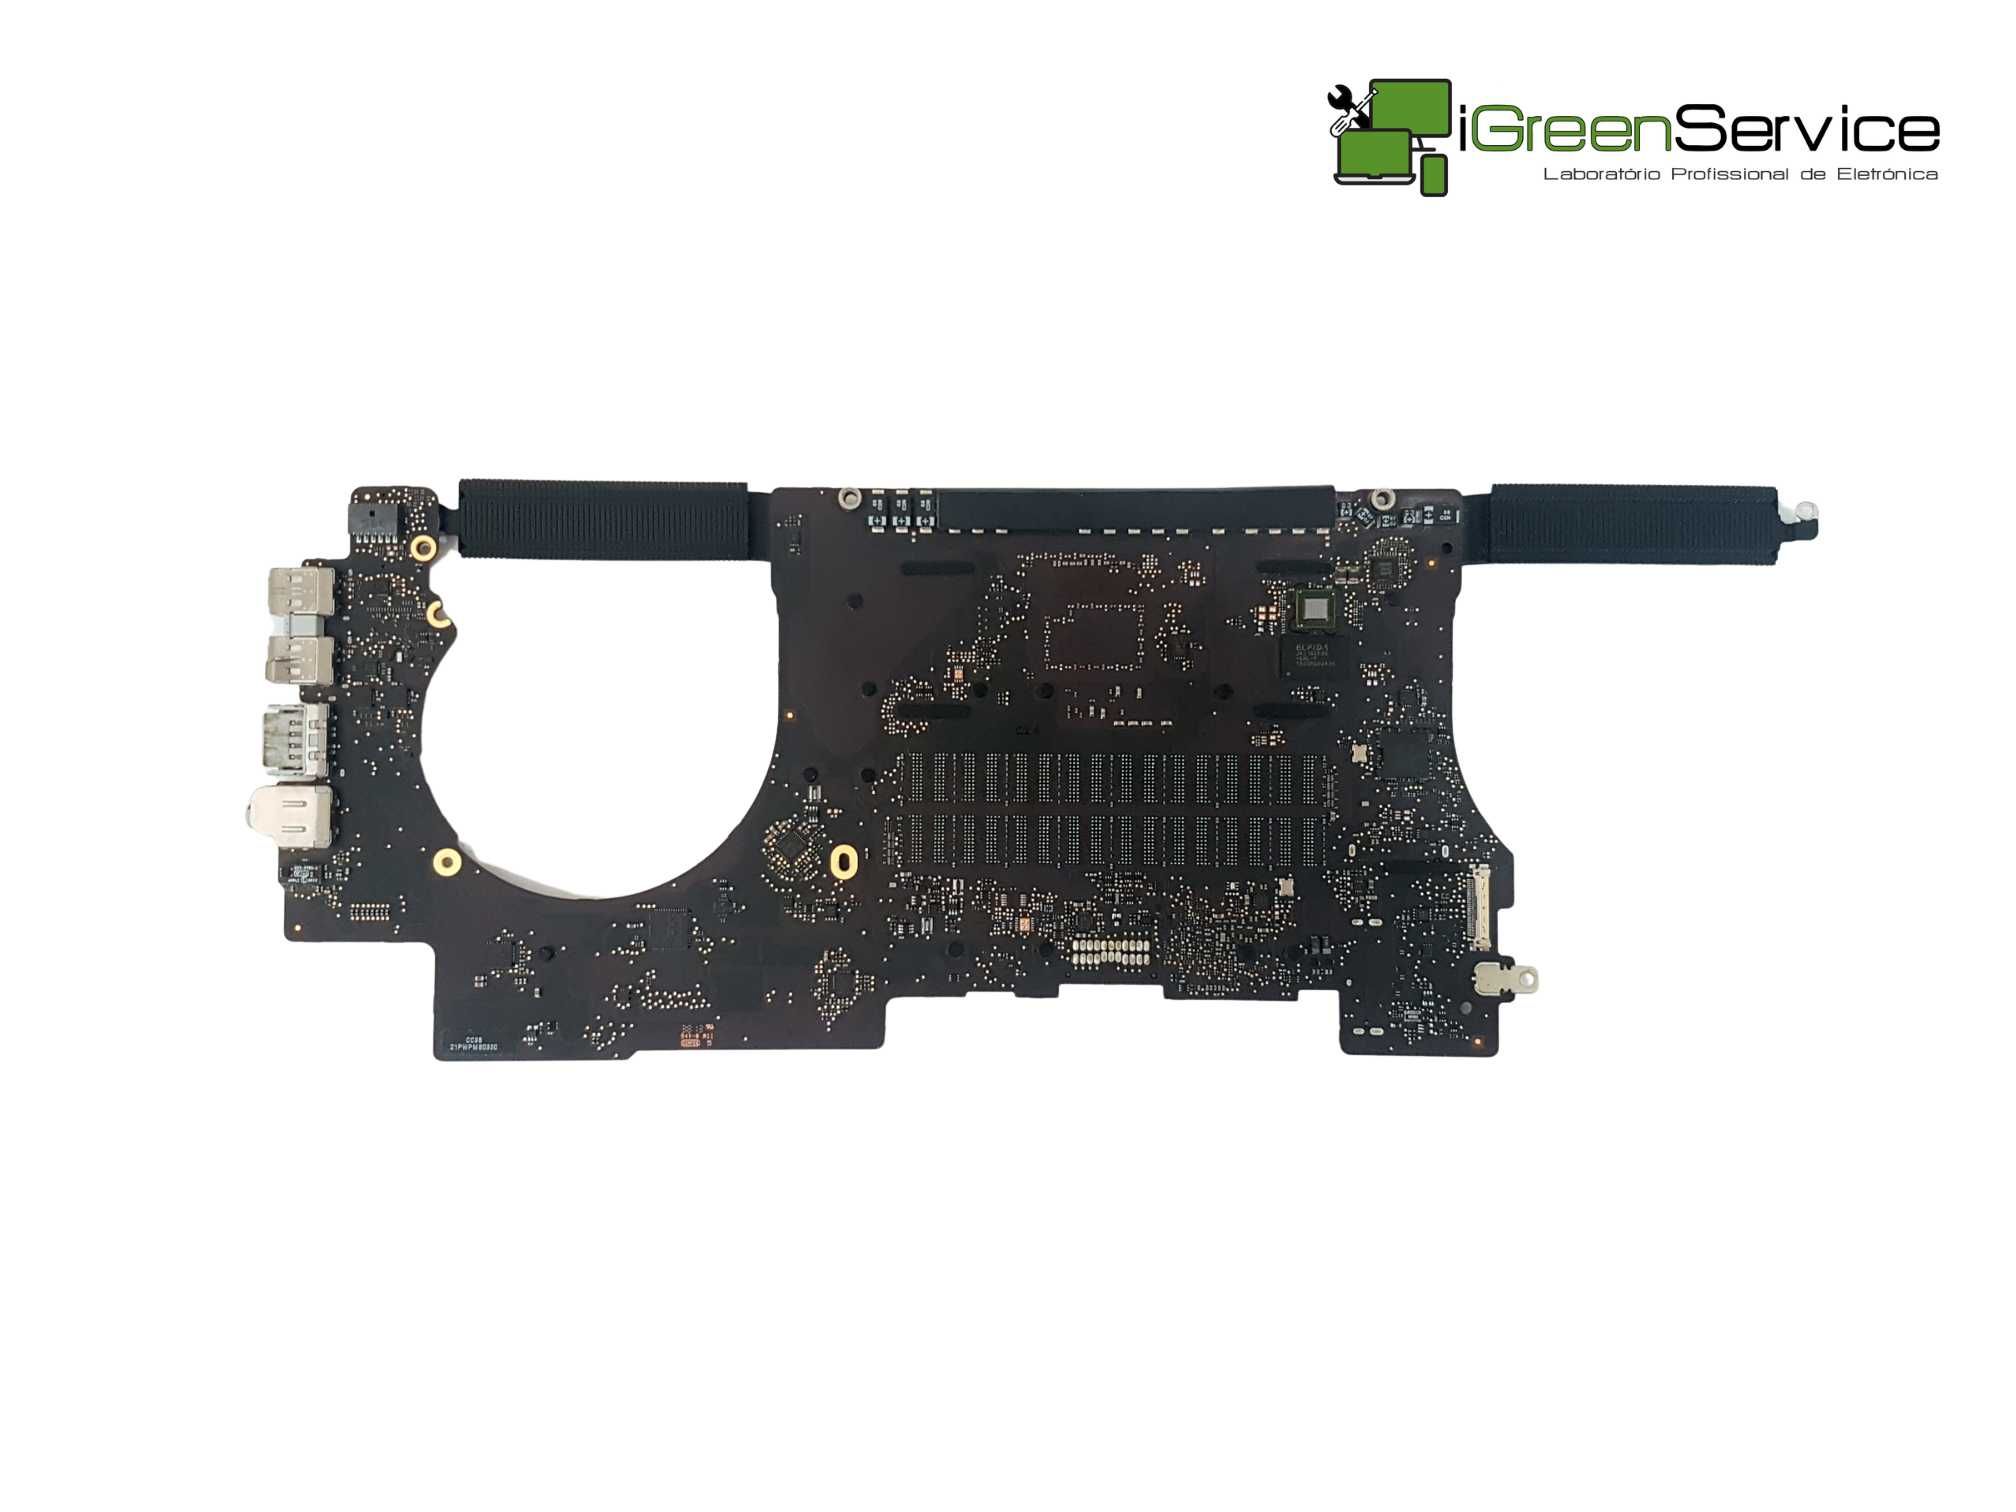 PLACA - Motherboard, MacBook Pro A1398 - Core I7 - 16gb Ram - Ano 2013